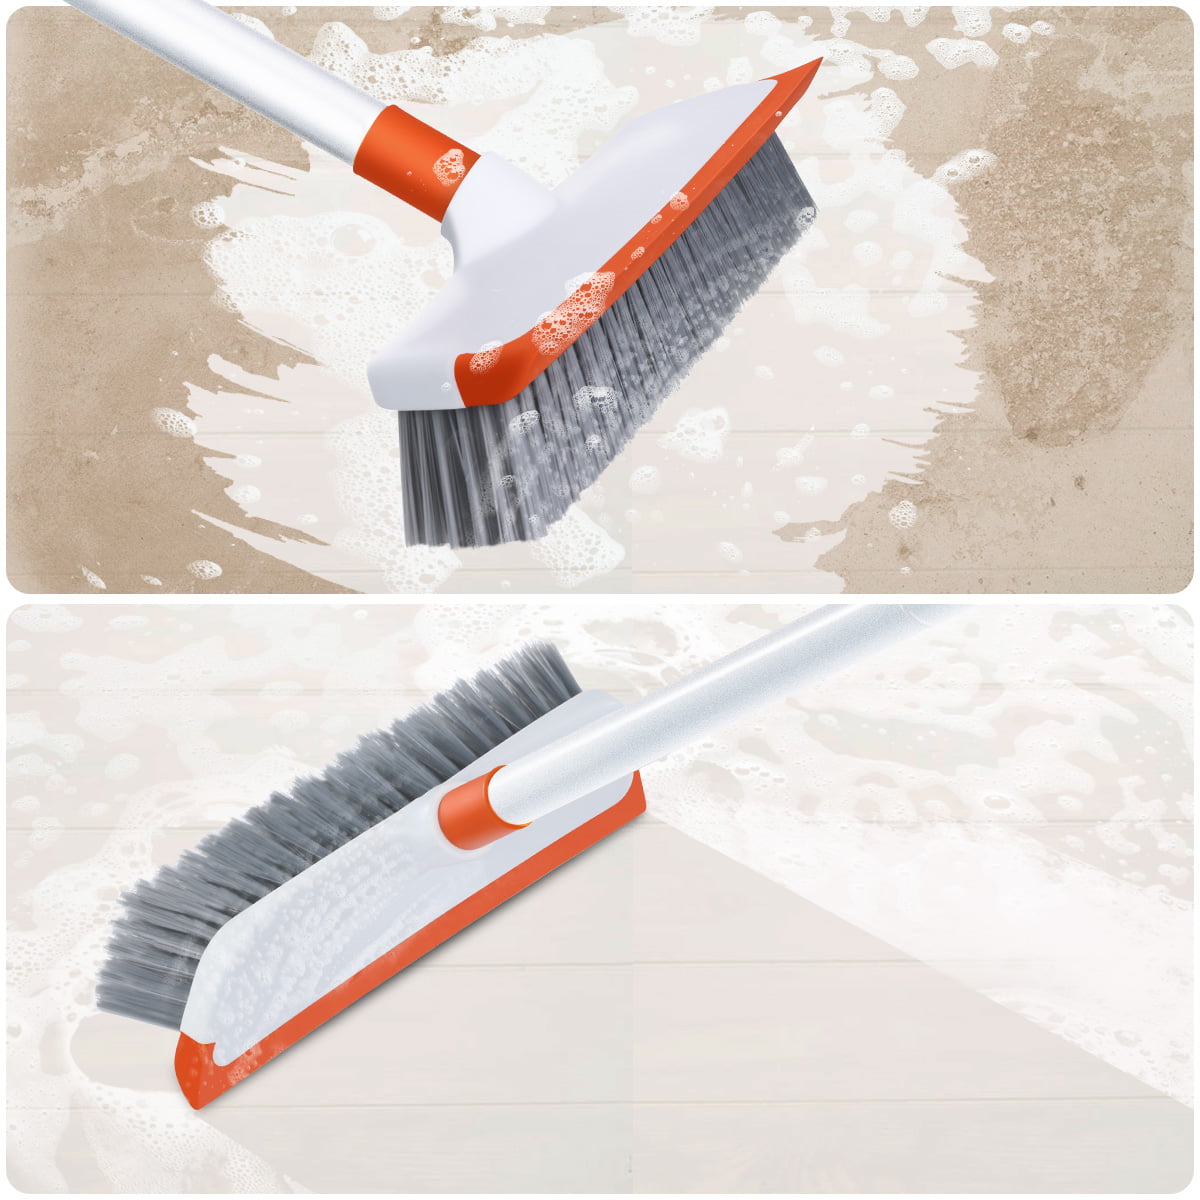 Floor Scrubber Brush, Heavy-Duty Quick-Connect